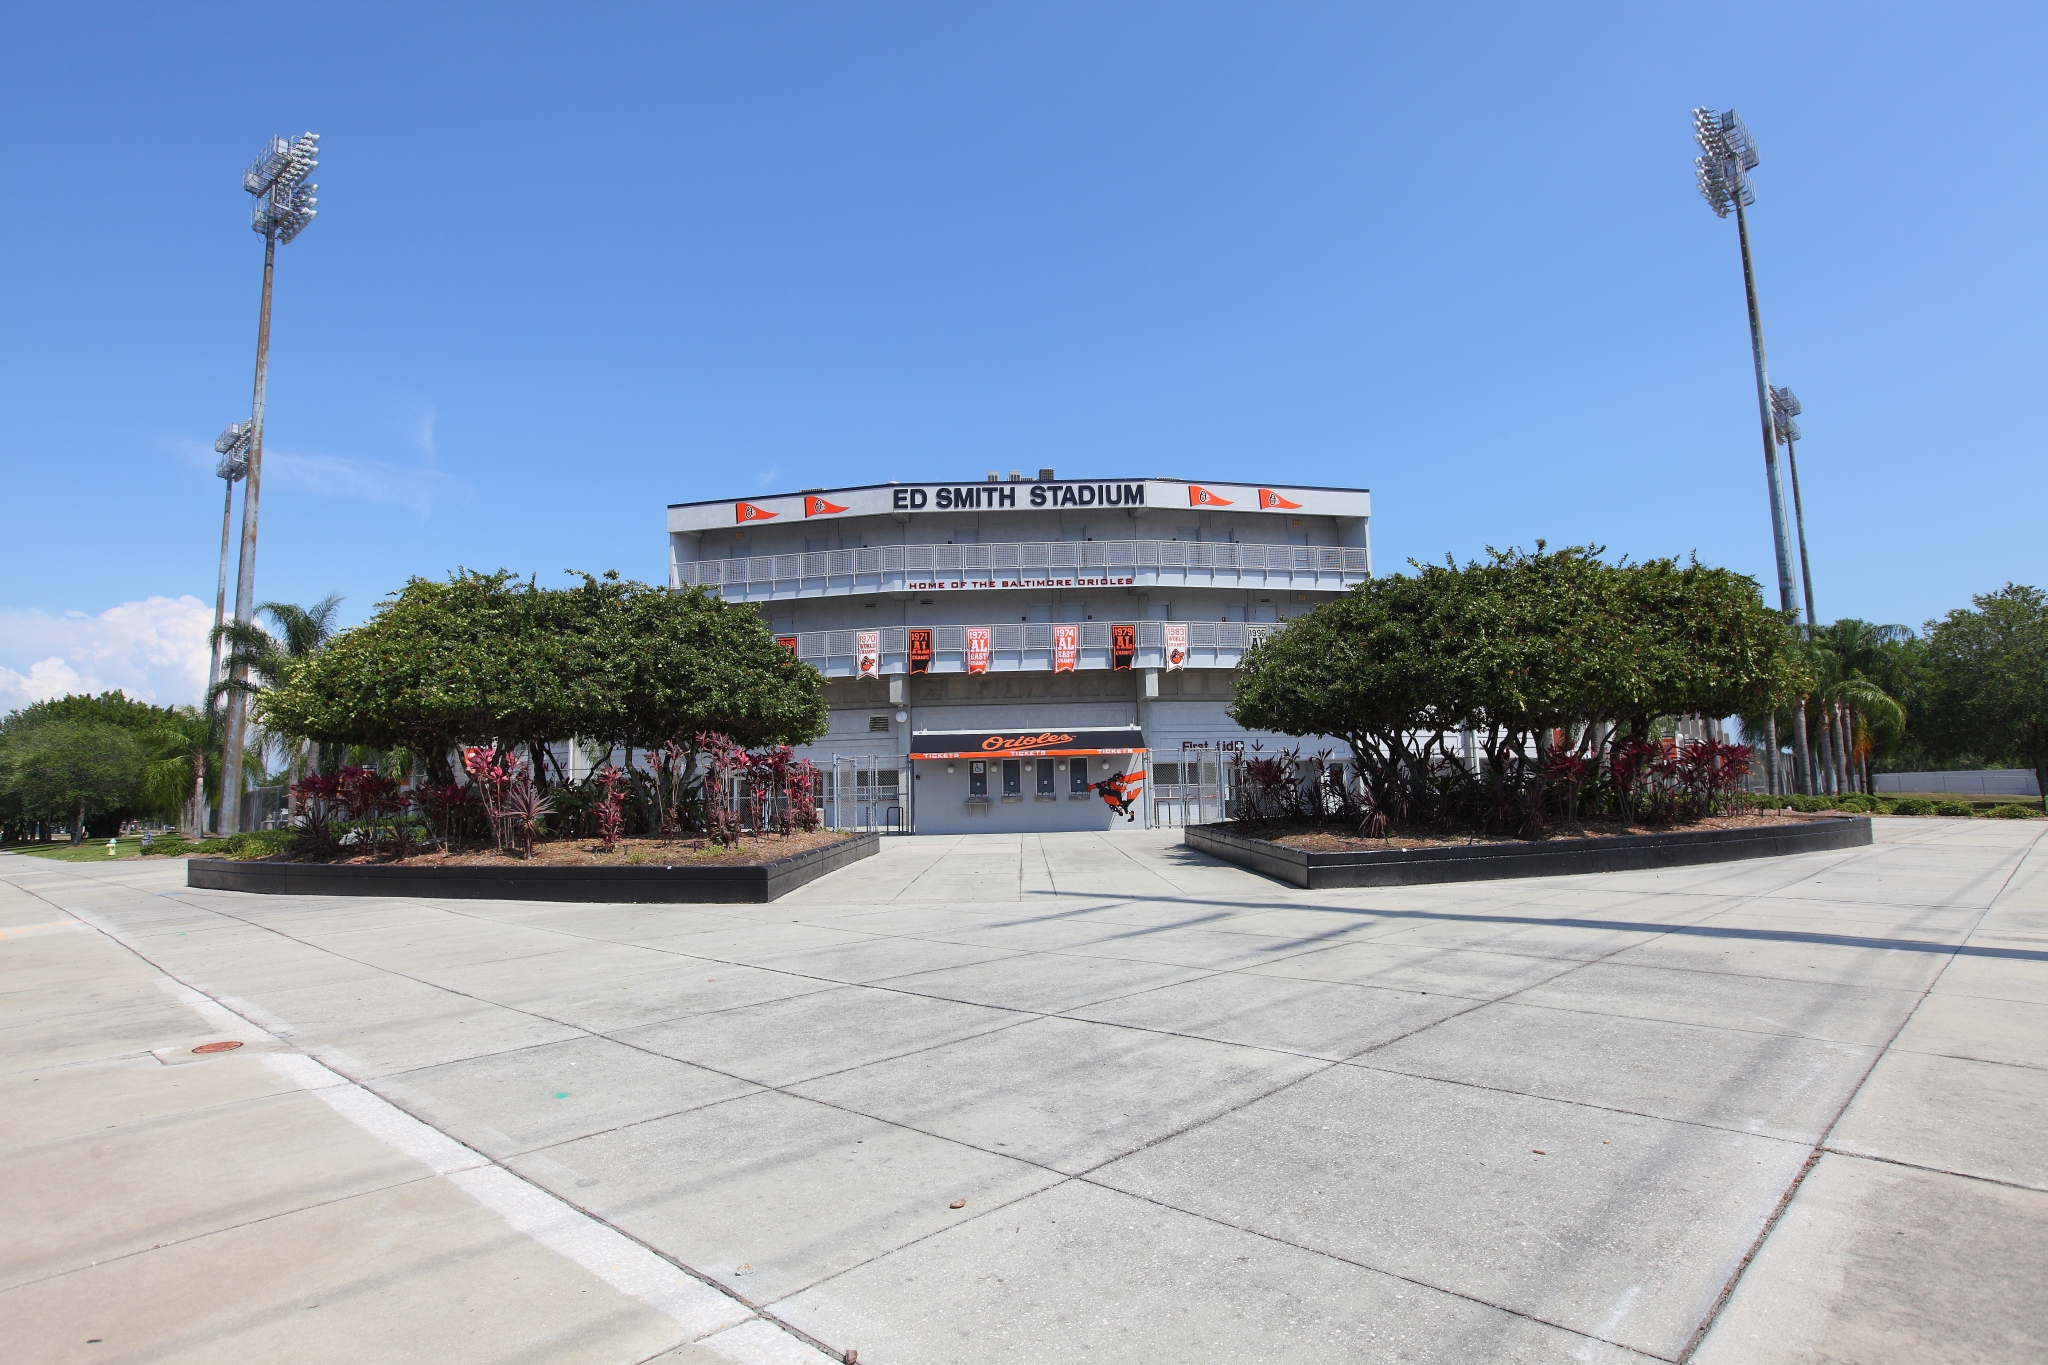 Spring training grounds Baltimore Orioles - Review of Ed Smith Stadium,  Sarasota, FL - Tripadvisor